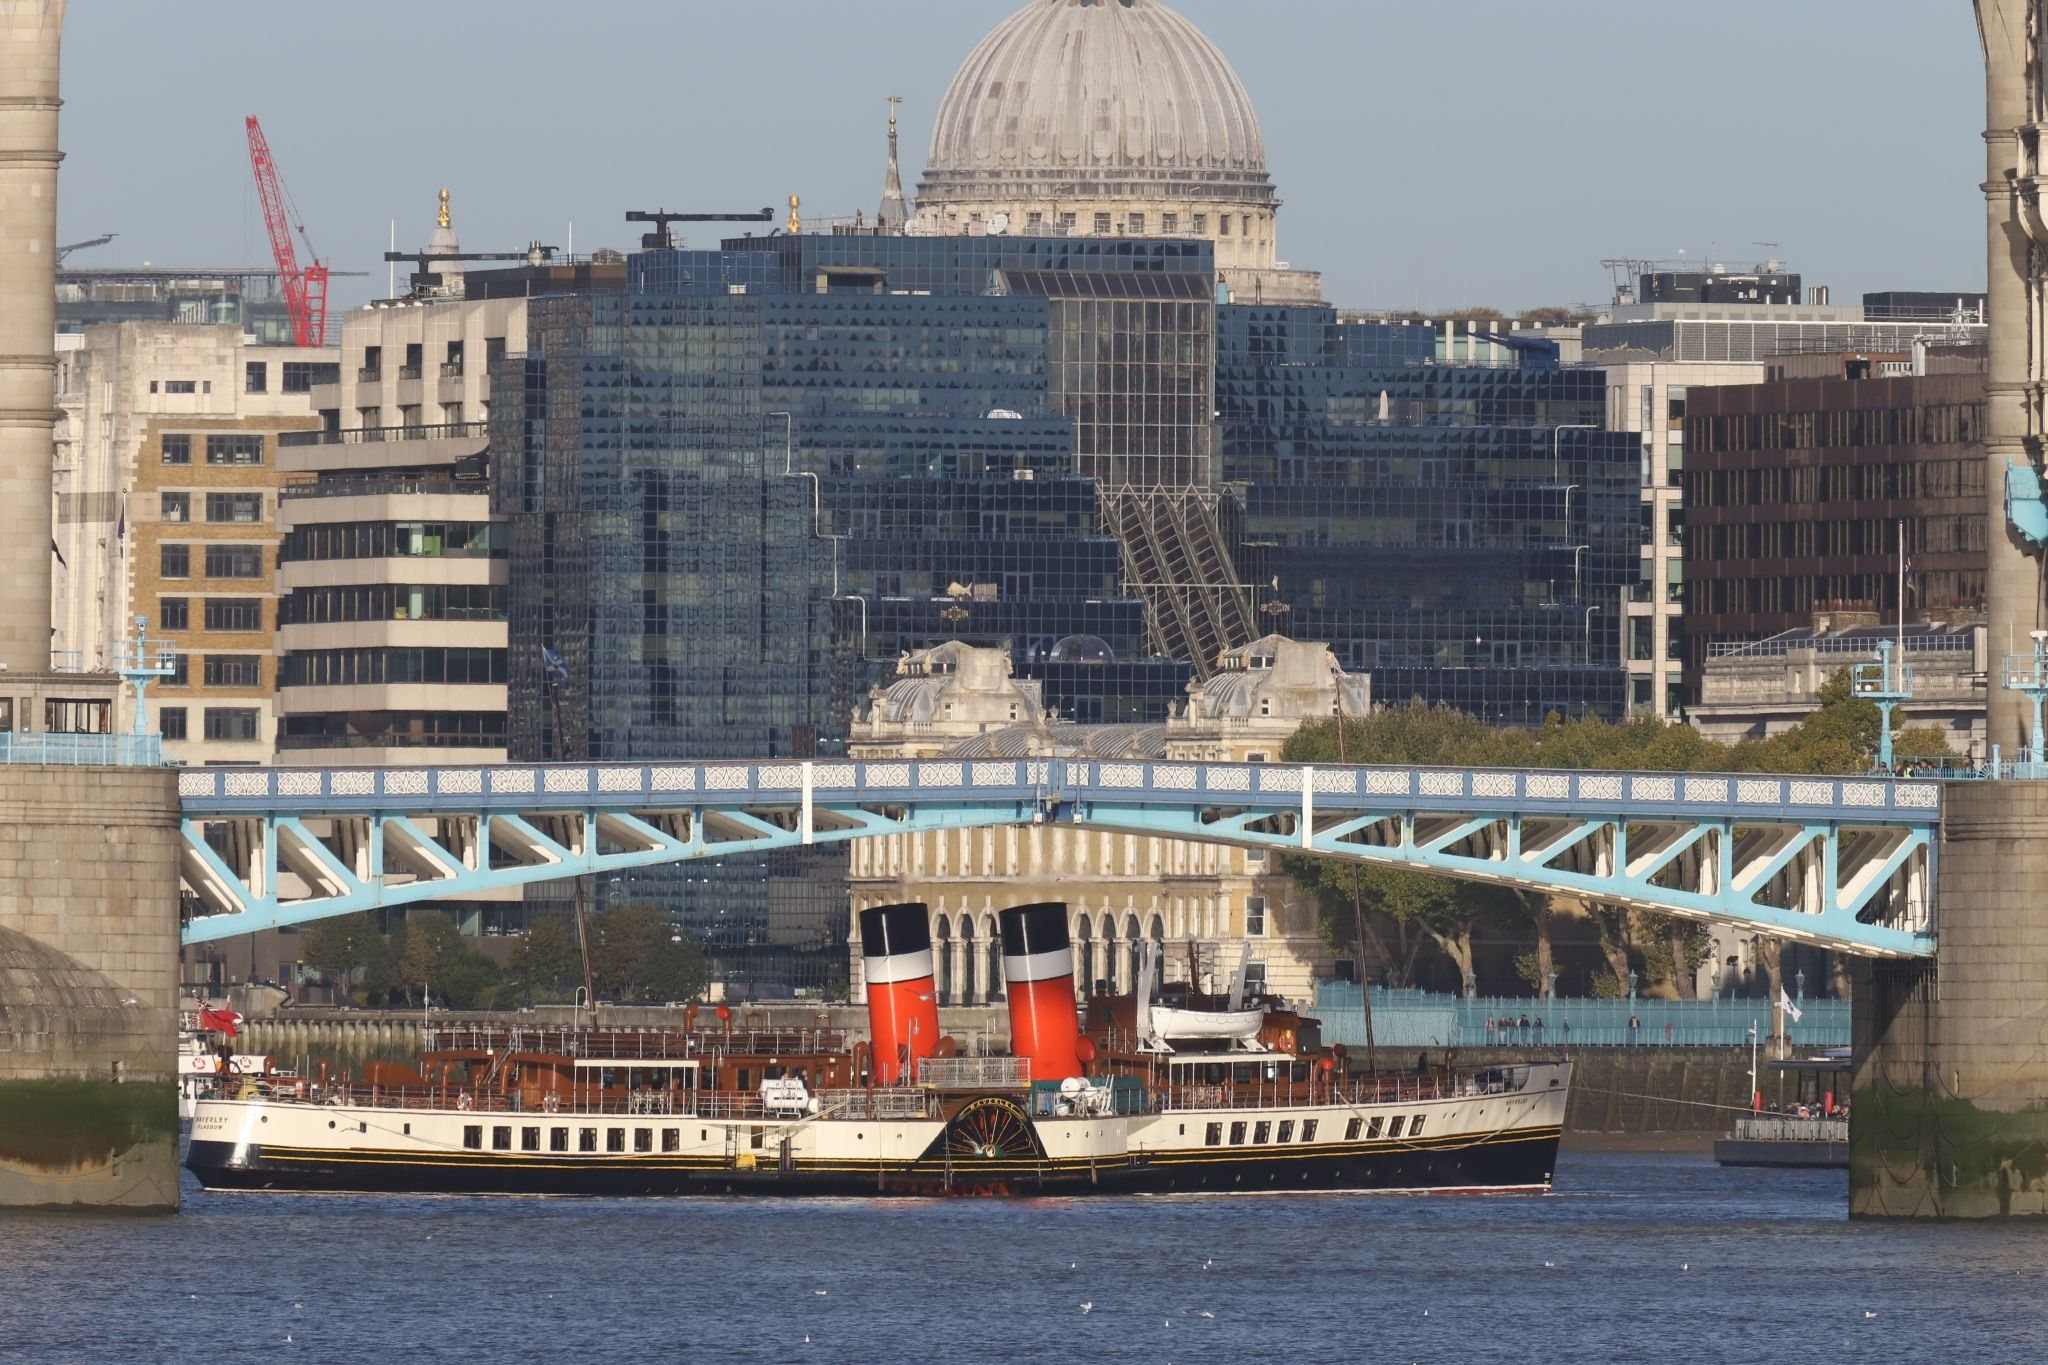 Paddle Steamer Waverley 2022 vist to the River Thames, London. October 2022.